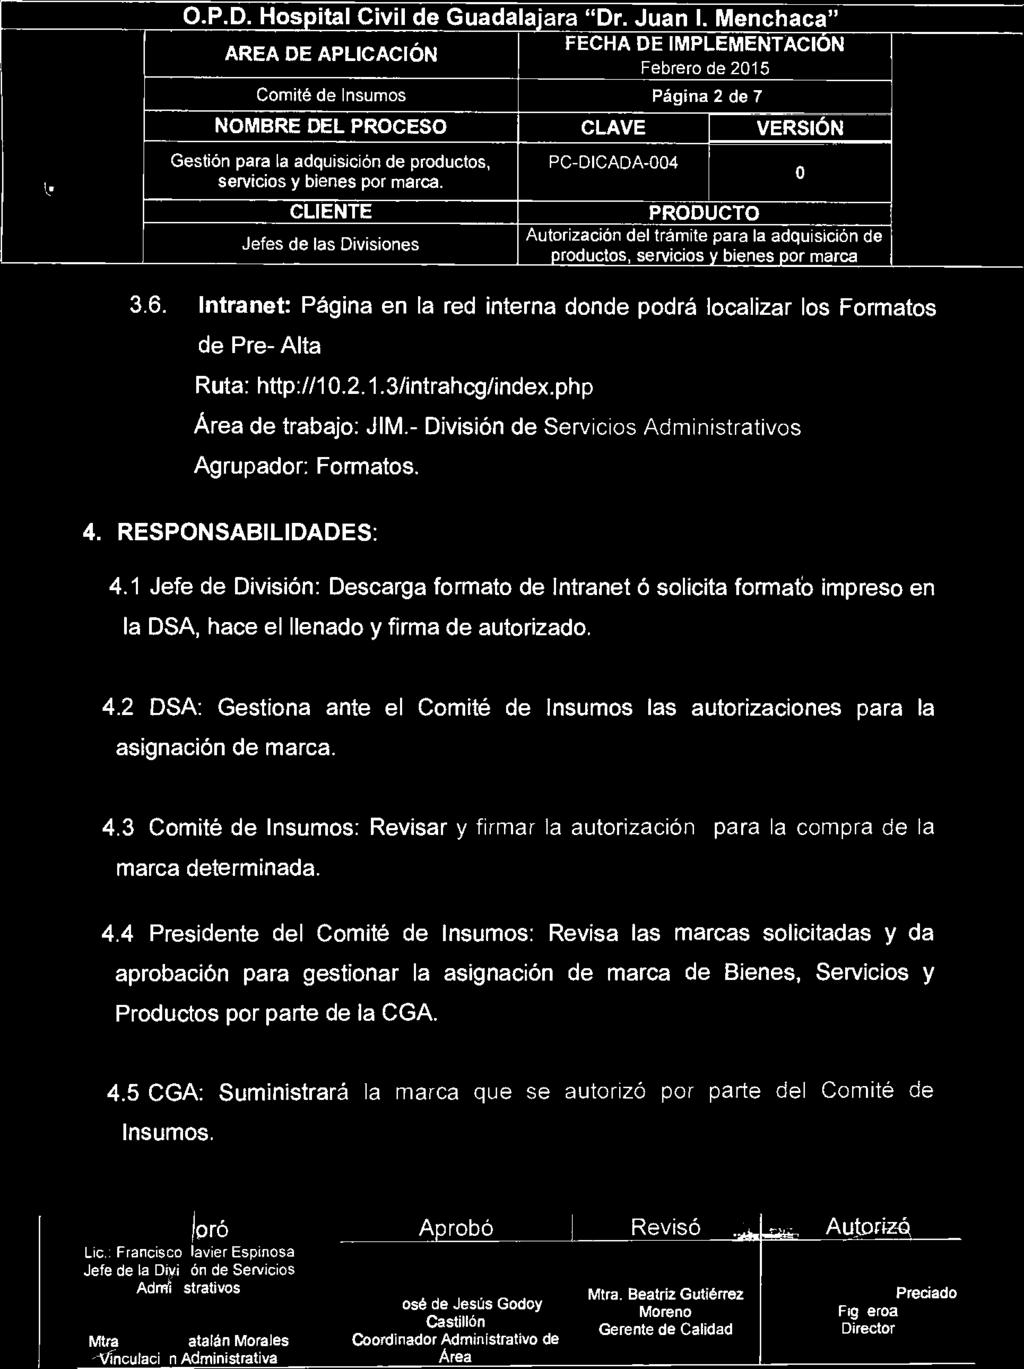 PD Hospital Civil de Guadalajara "Dr Juan I Menchaca" our TI II oili Comité de Insumos Página 2 de 7, 36 Intranet: Página en la red interna donde podrá localizar los Formatos de Pre- Alta Ruta: